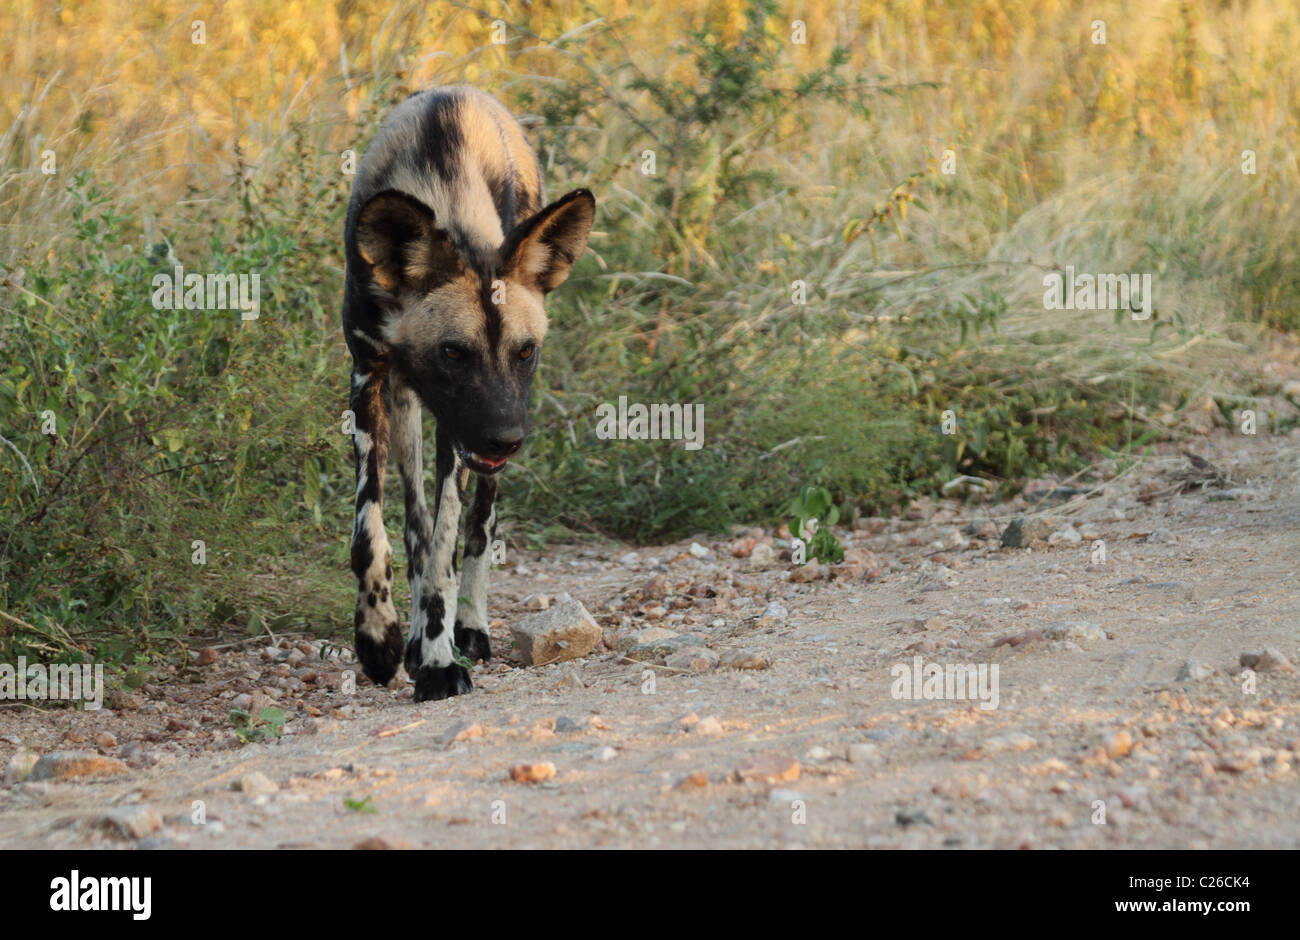 African wild dog walking on road Stock Photo